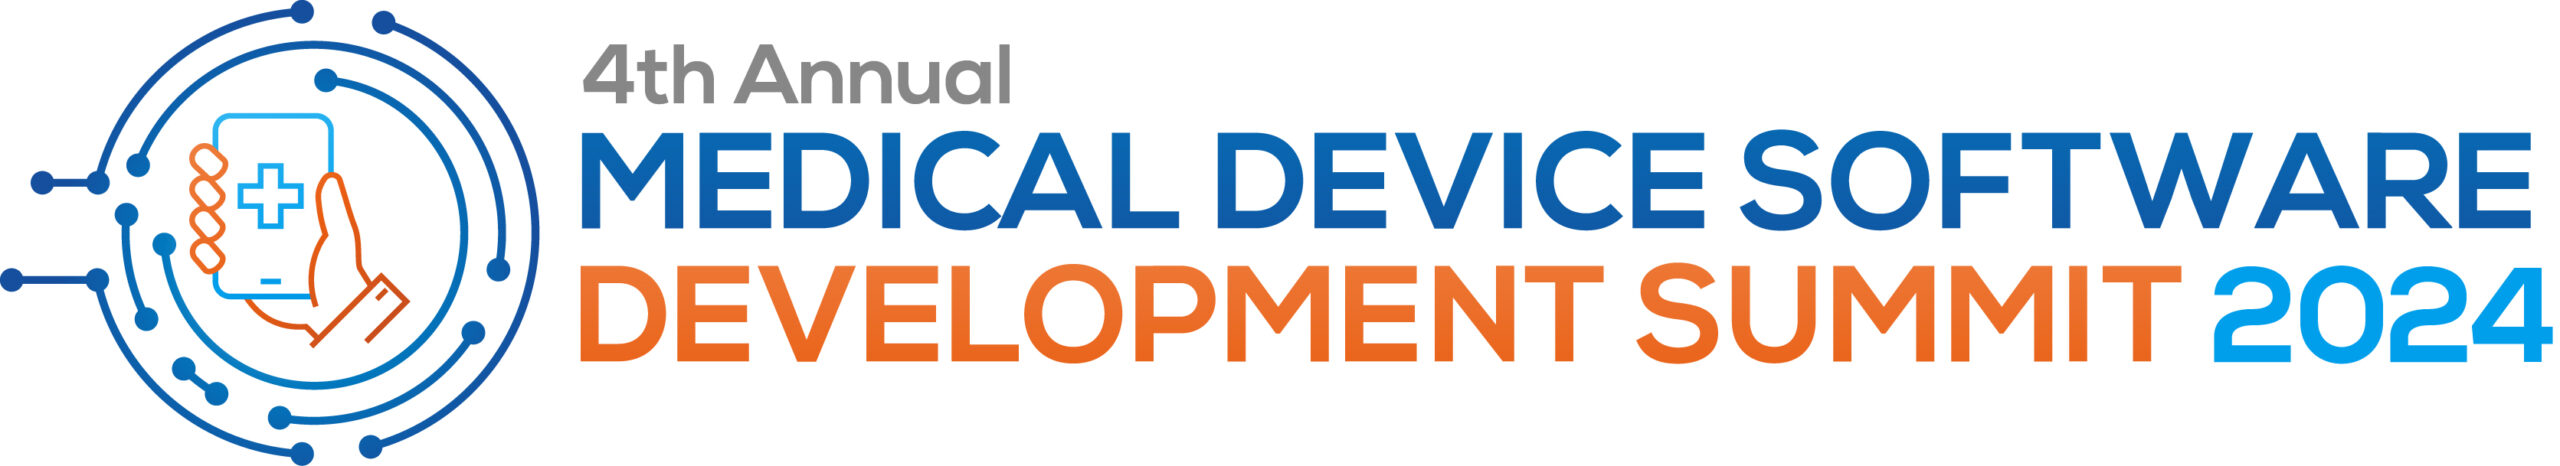 4th Medical Device Software Development Summit logo